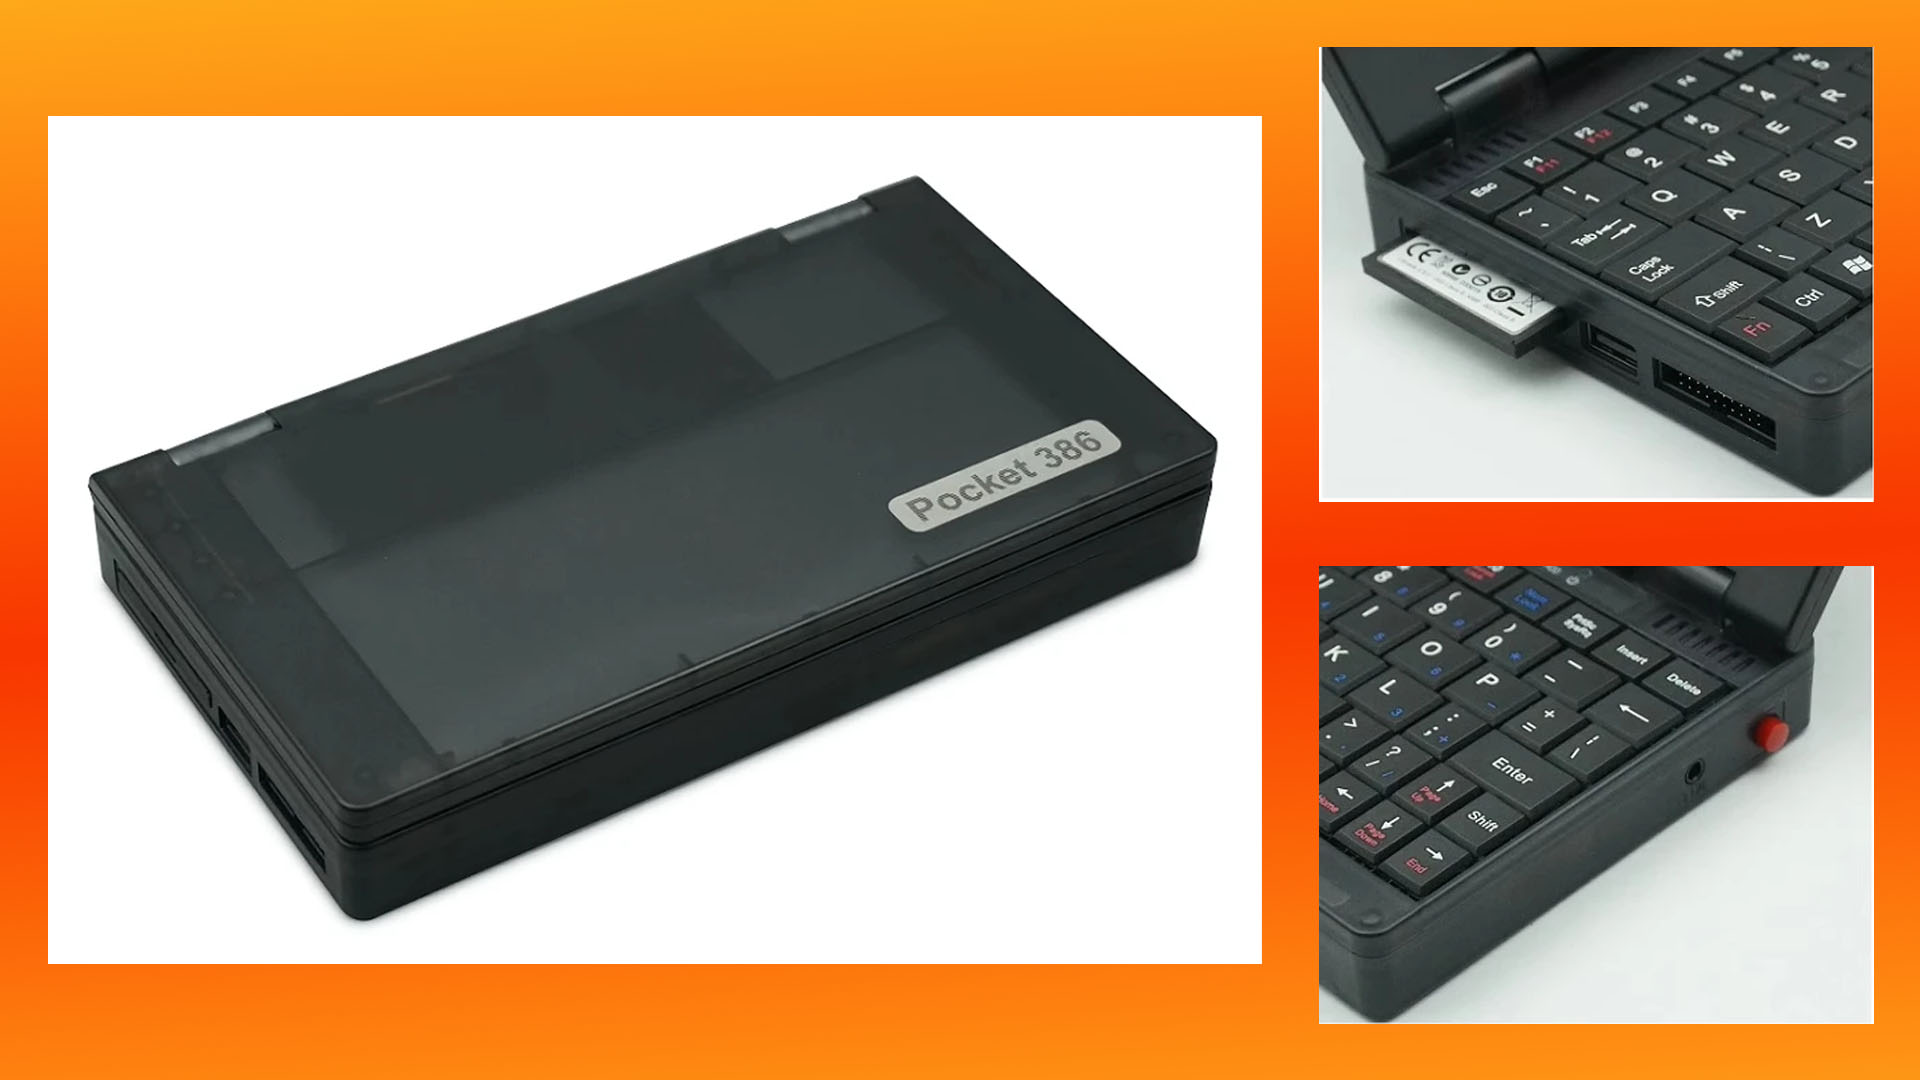 Retro gaming PC laptops - Pocket Pocket 386